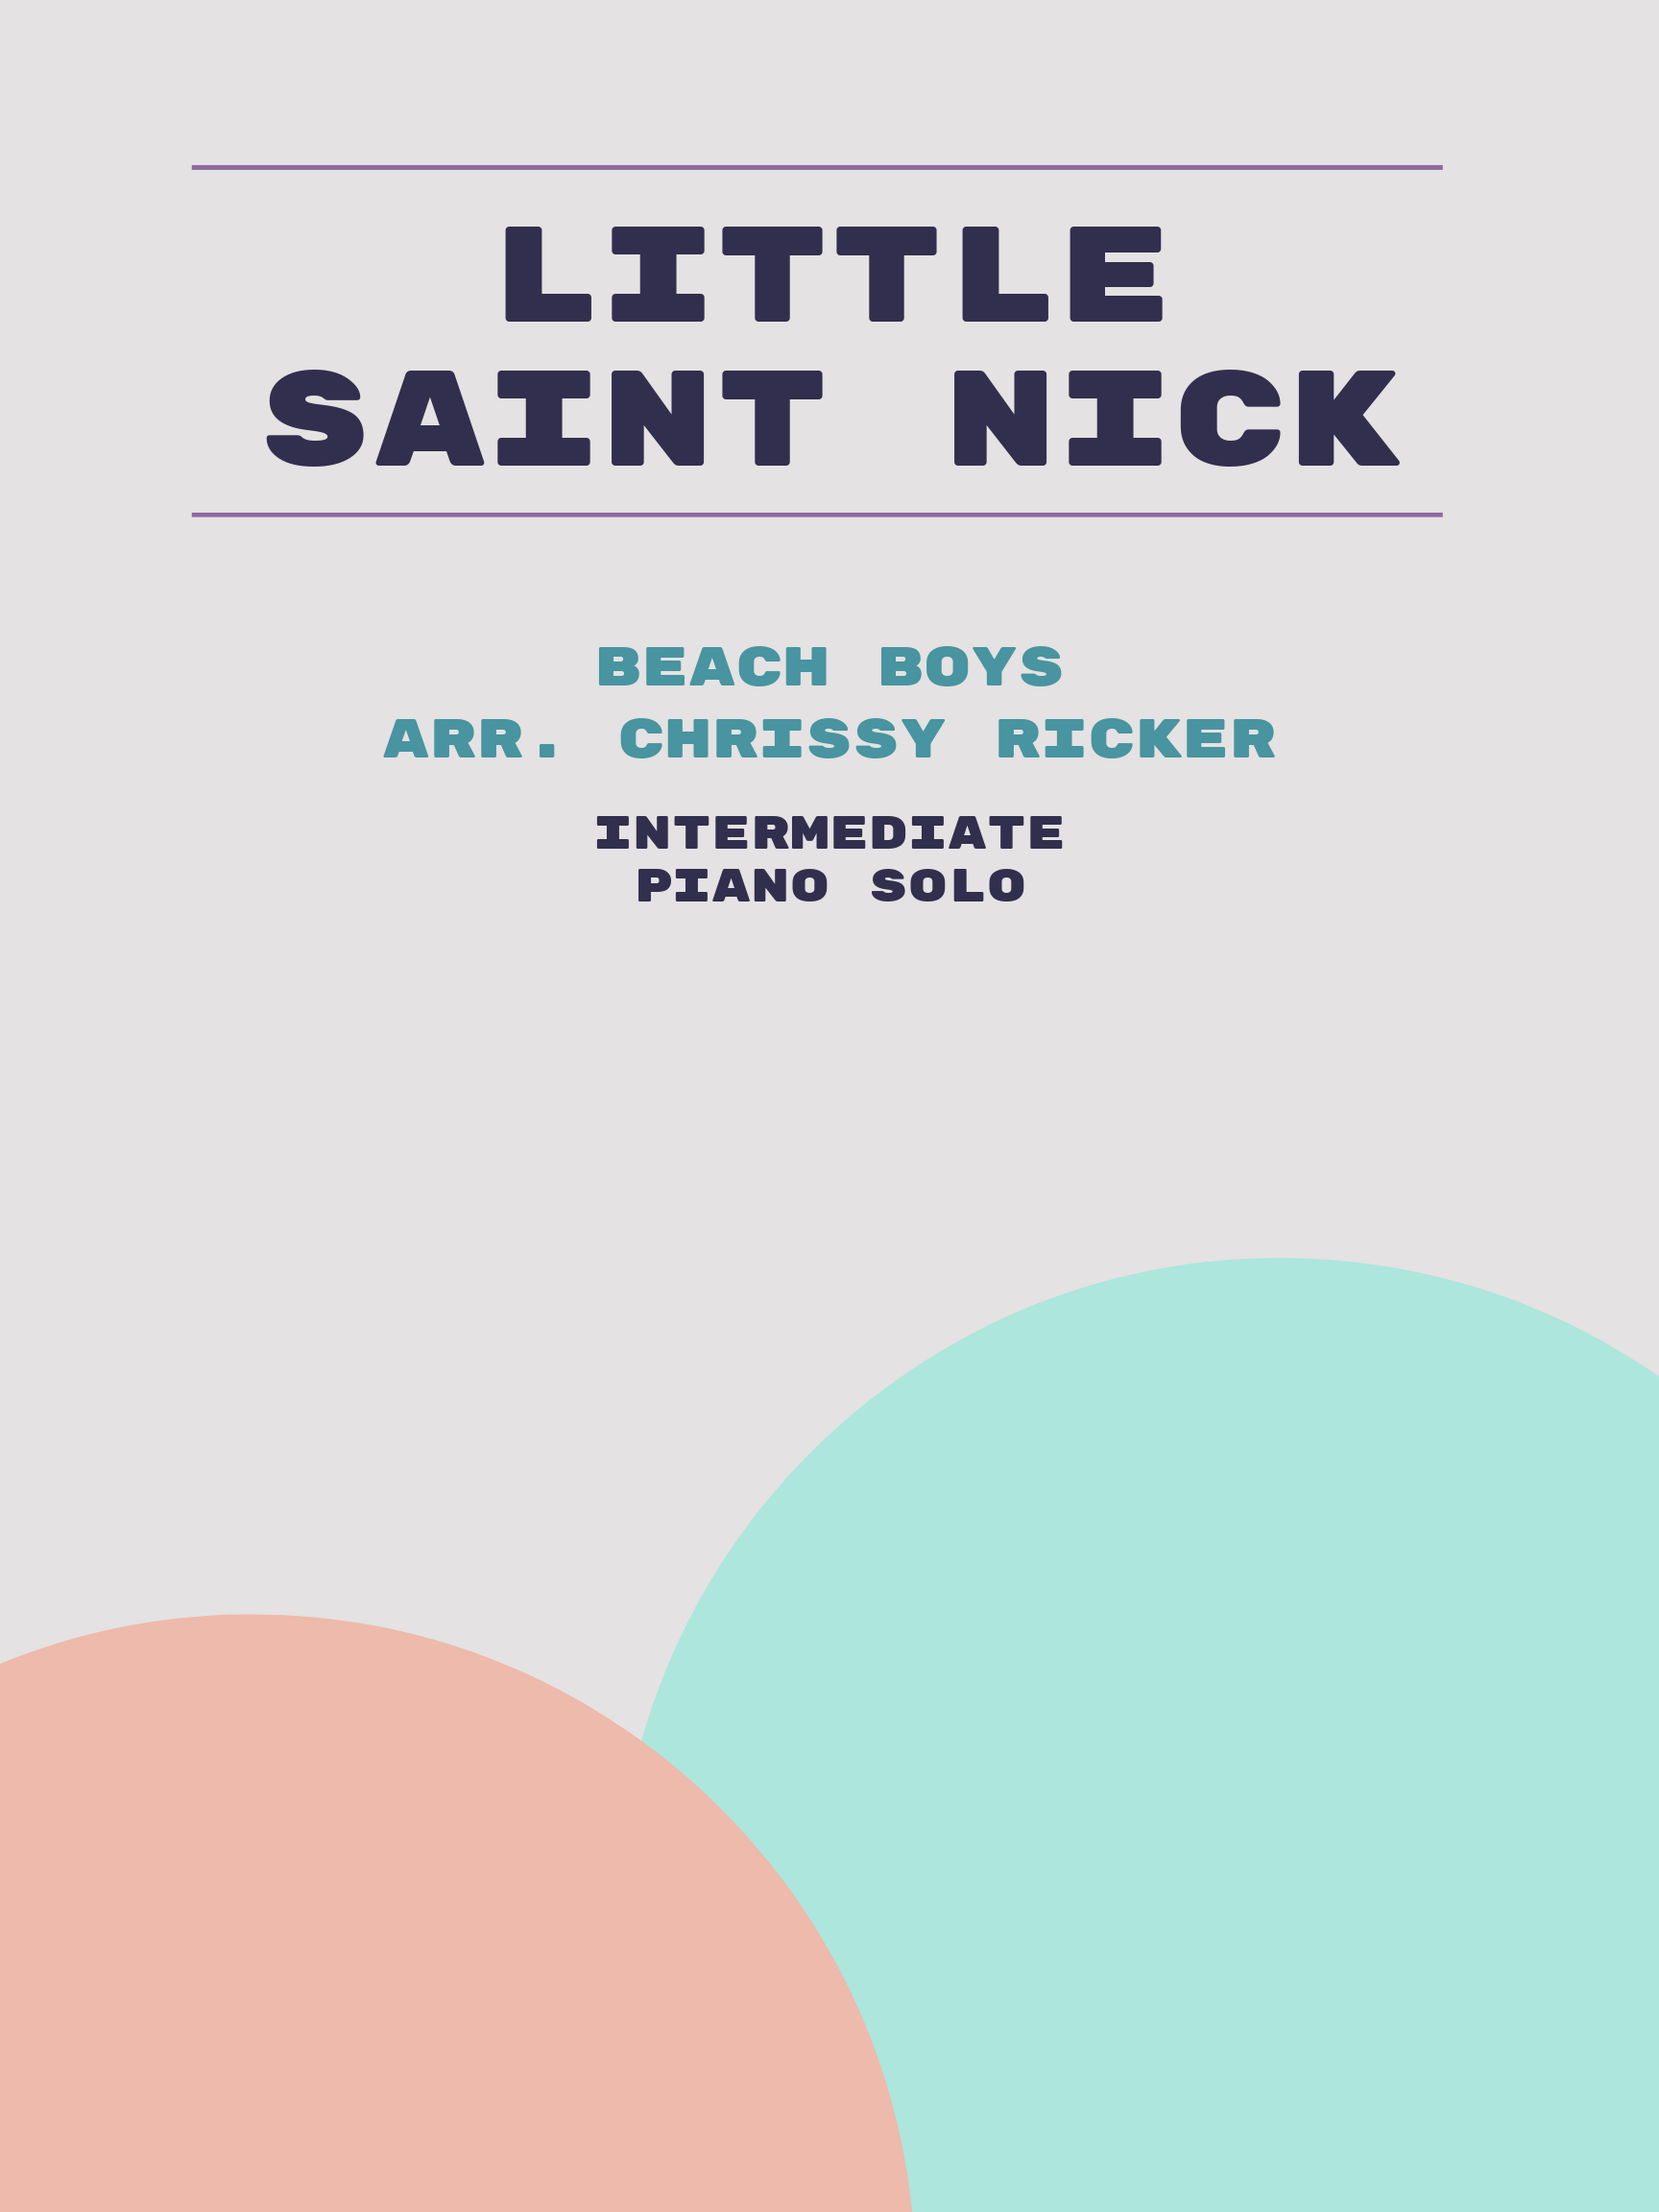 Little Saint Nick by Beach Boys